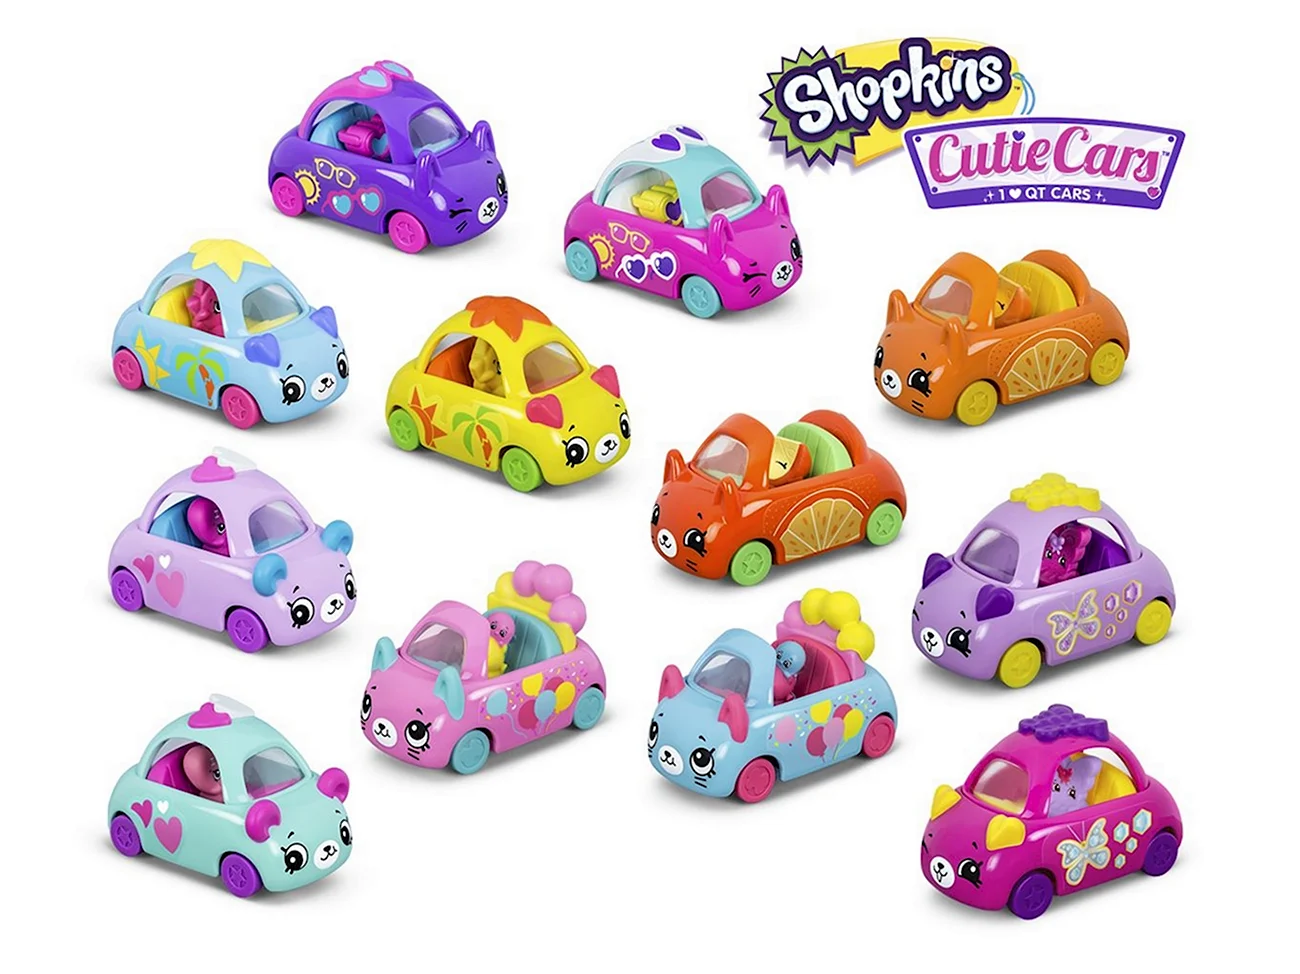 Cutie cars Shopkins